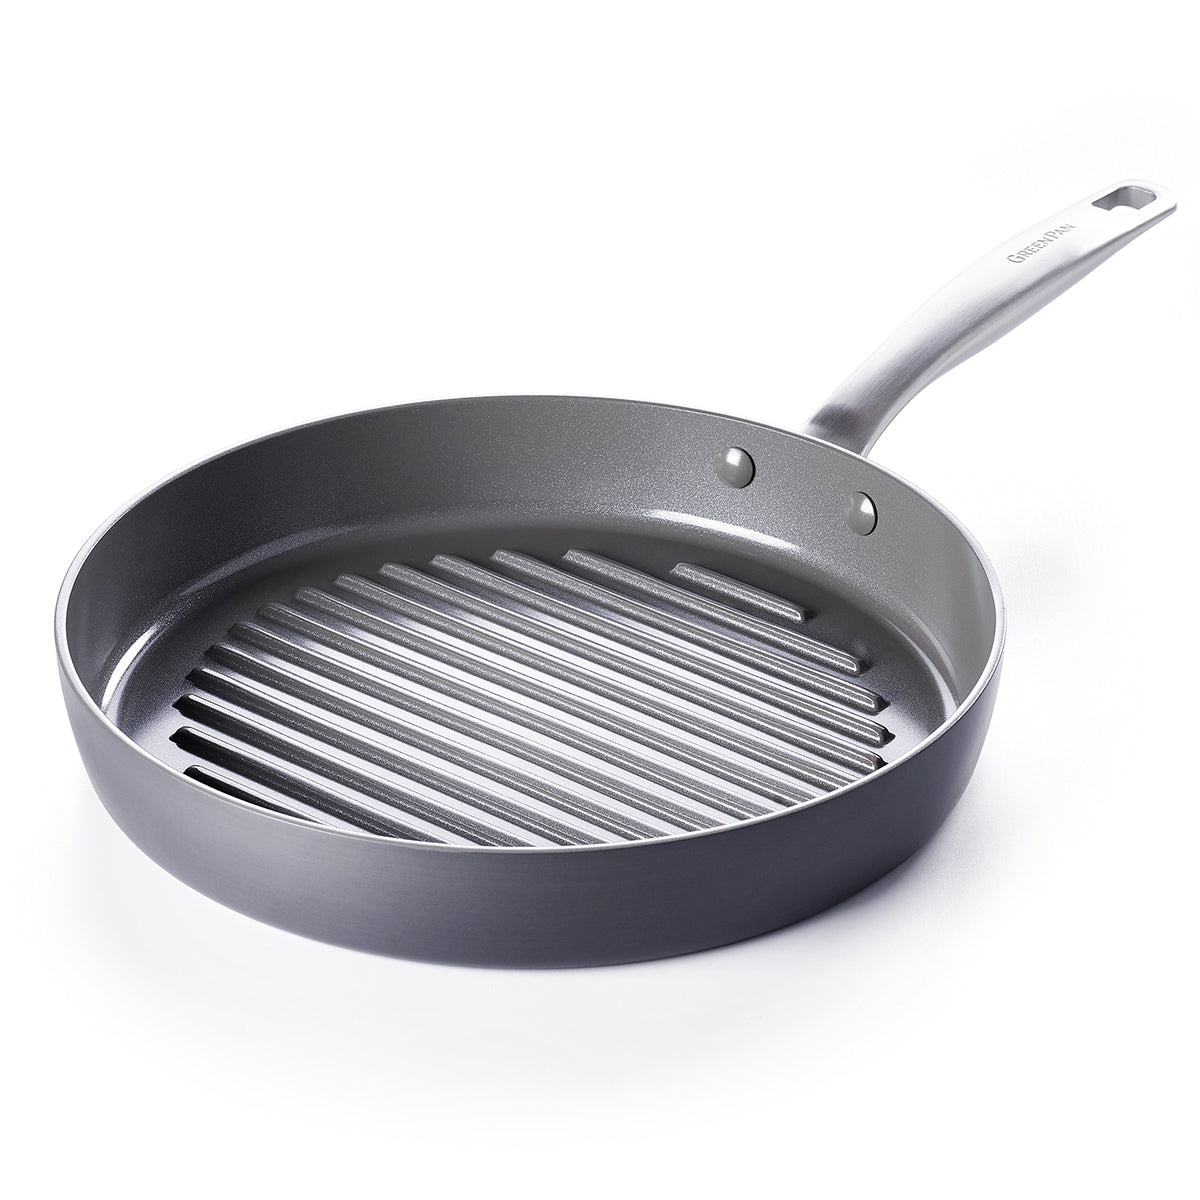 Circulon Genesis Hard-Anodized Nonstick 11-inch Round Grill Pan